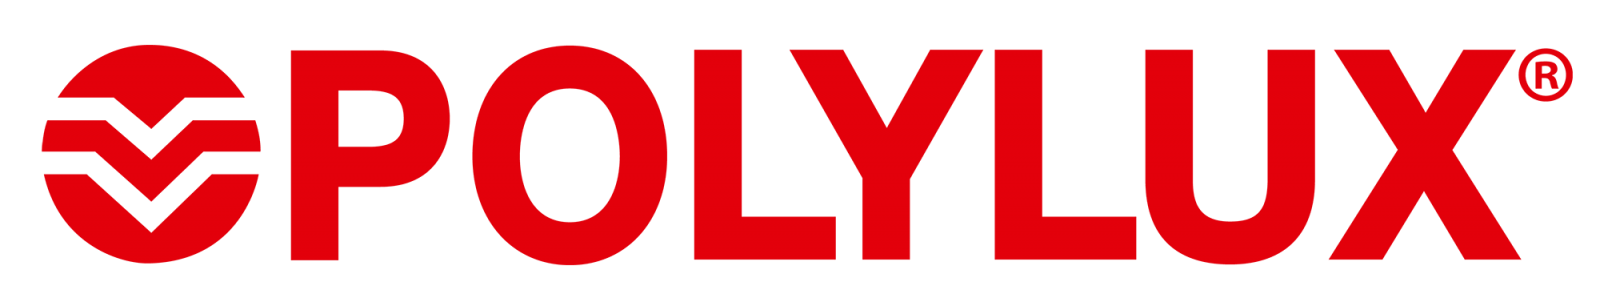 Polylux